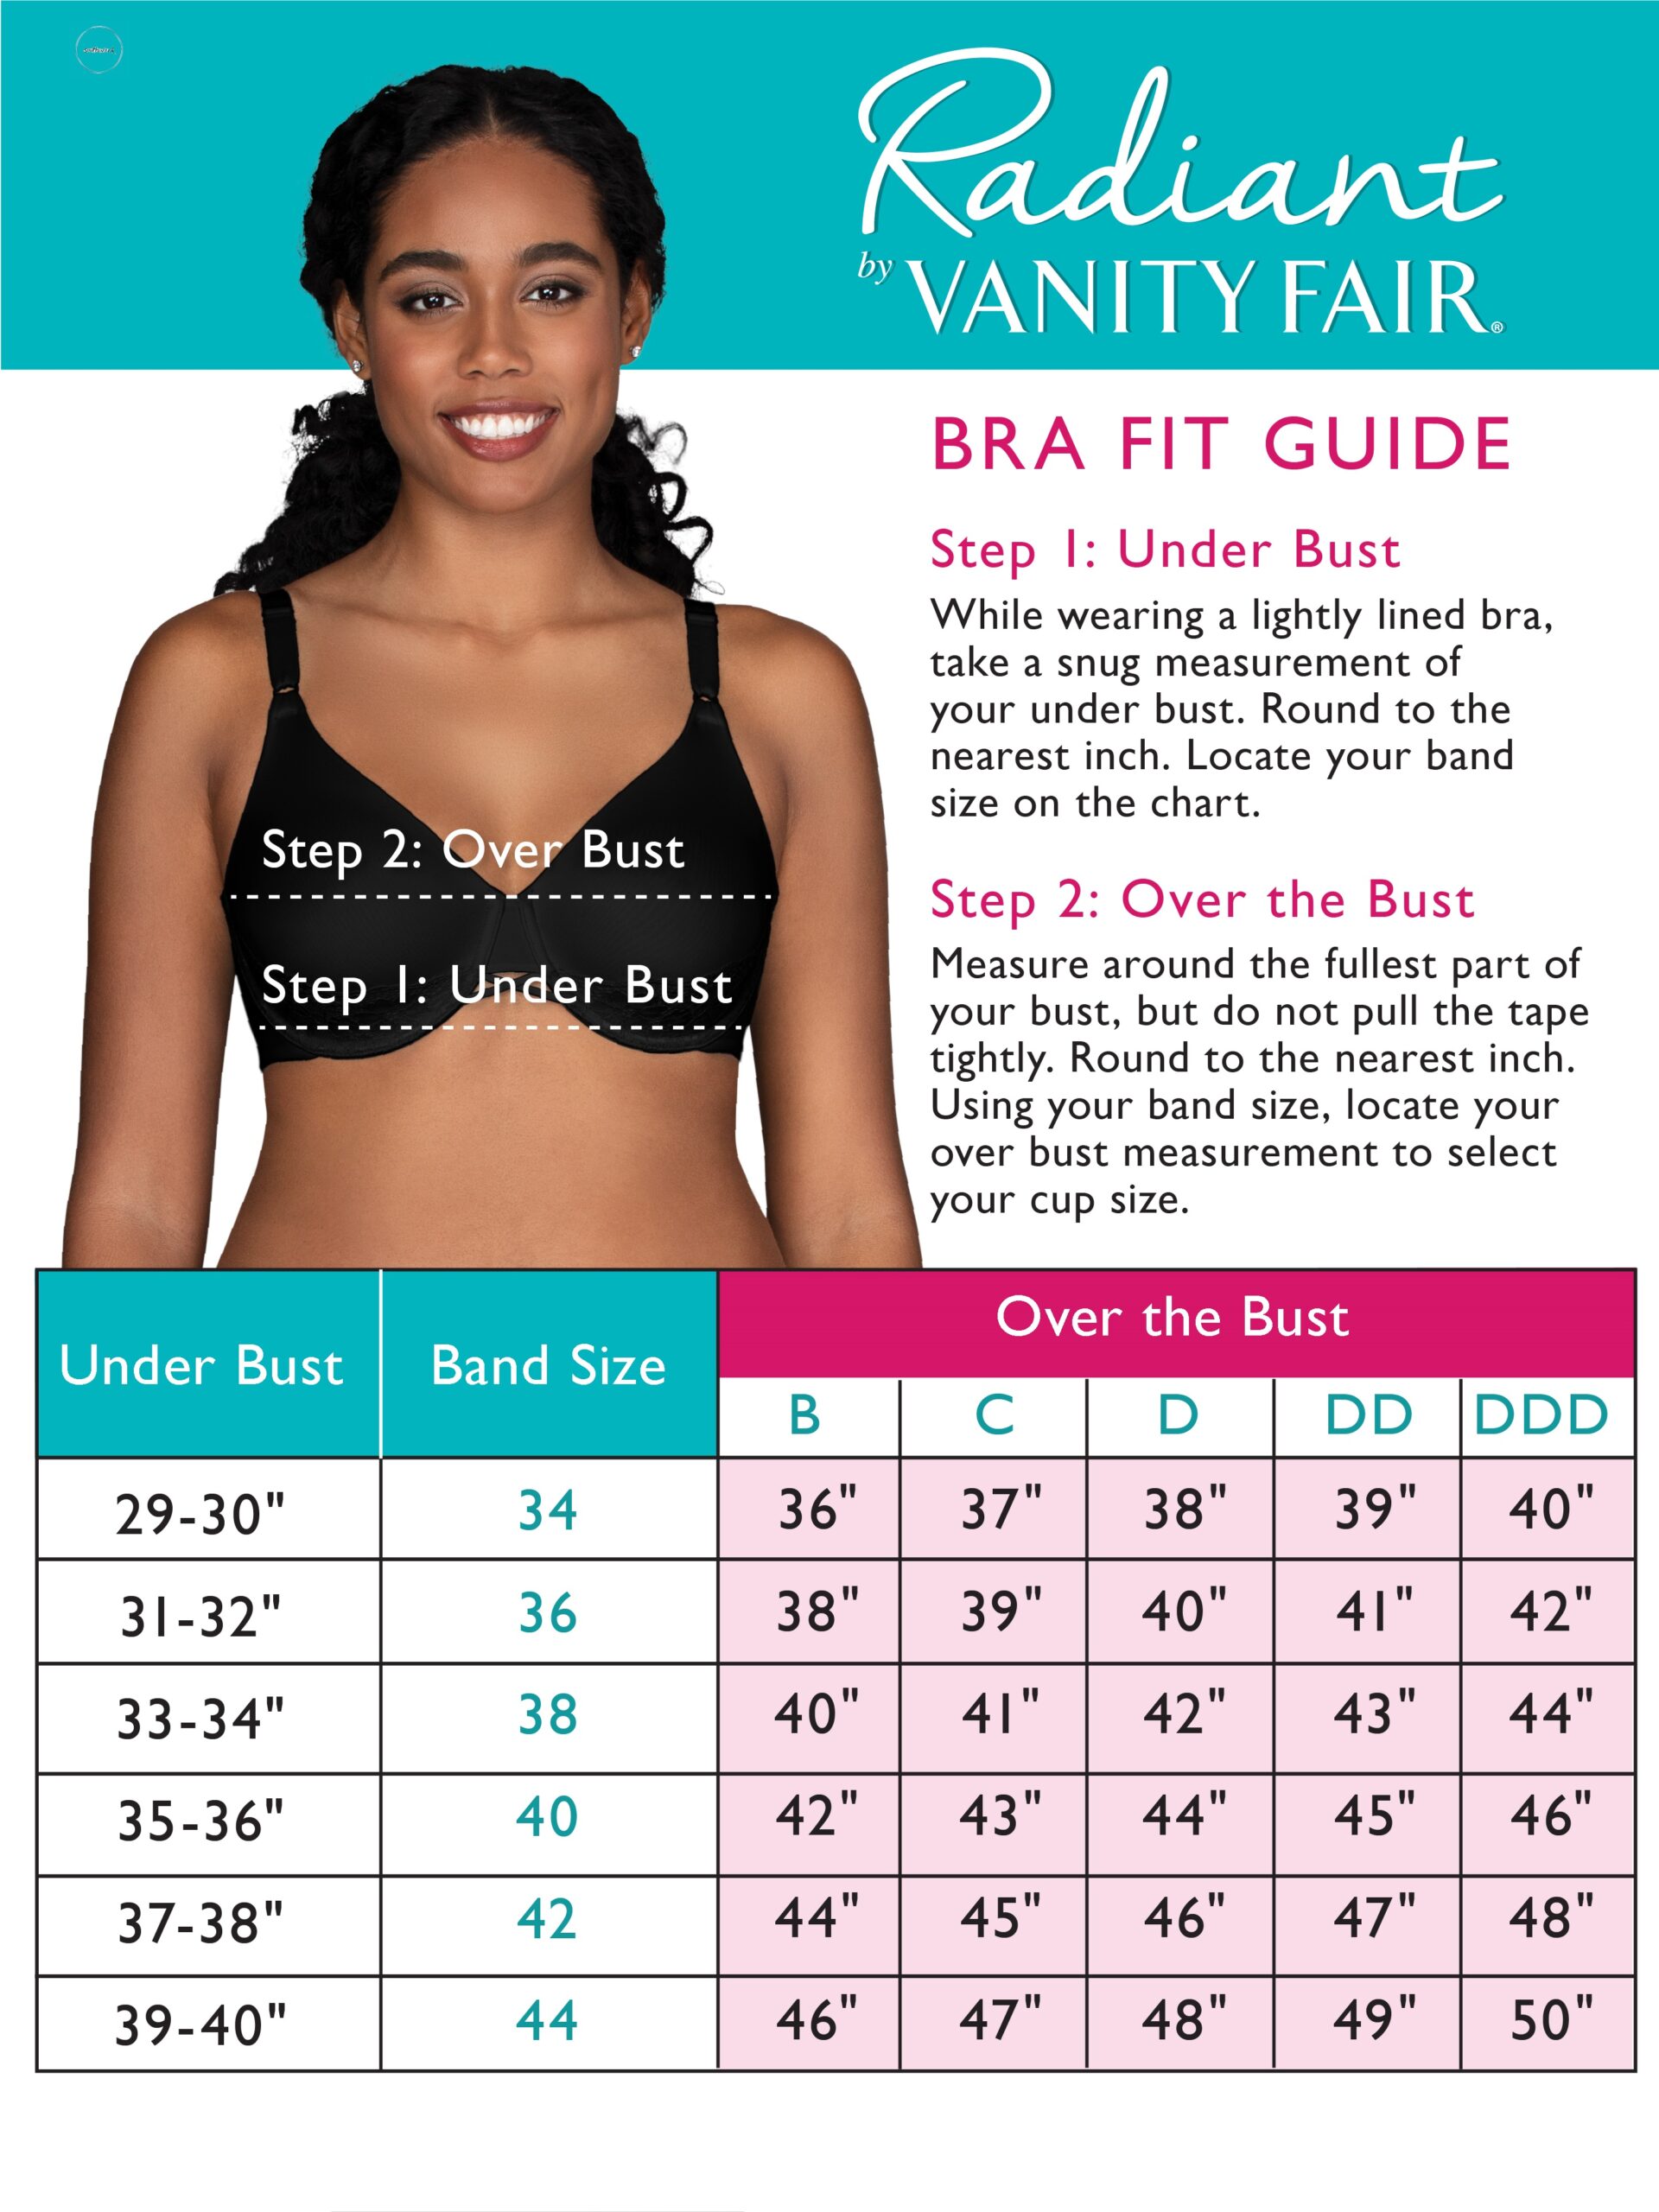 How to measure bra size Vanity Fair?